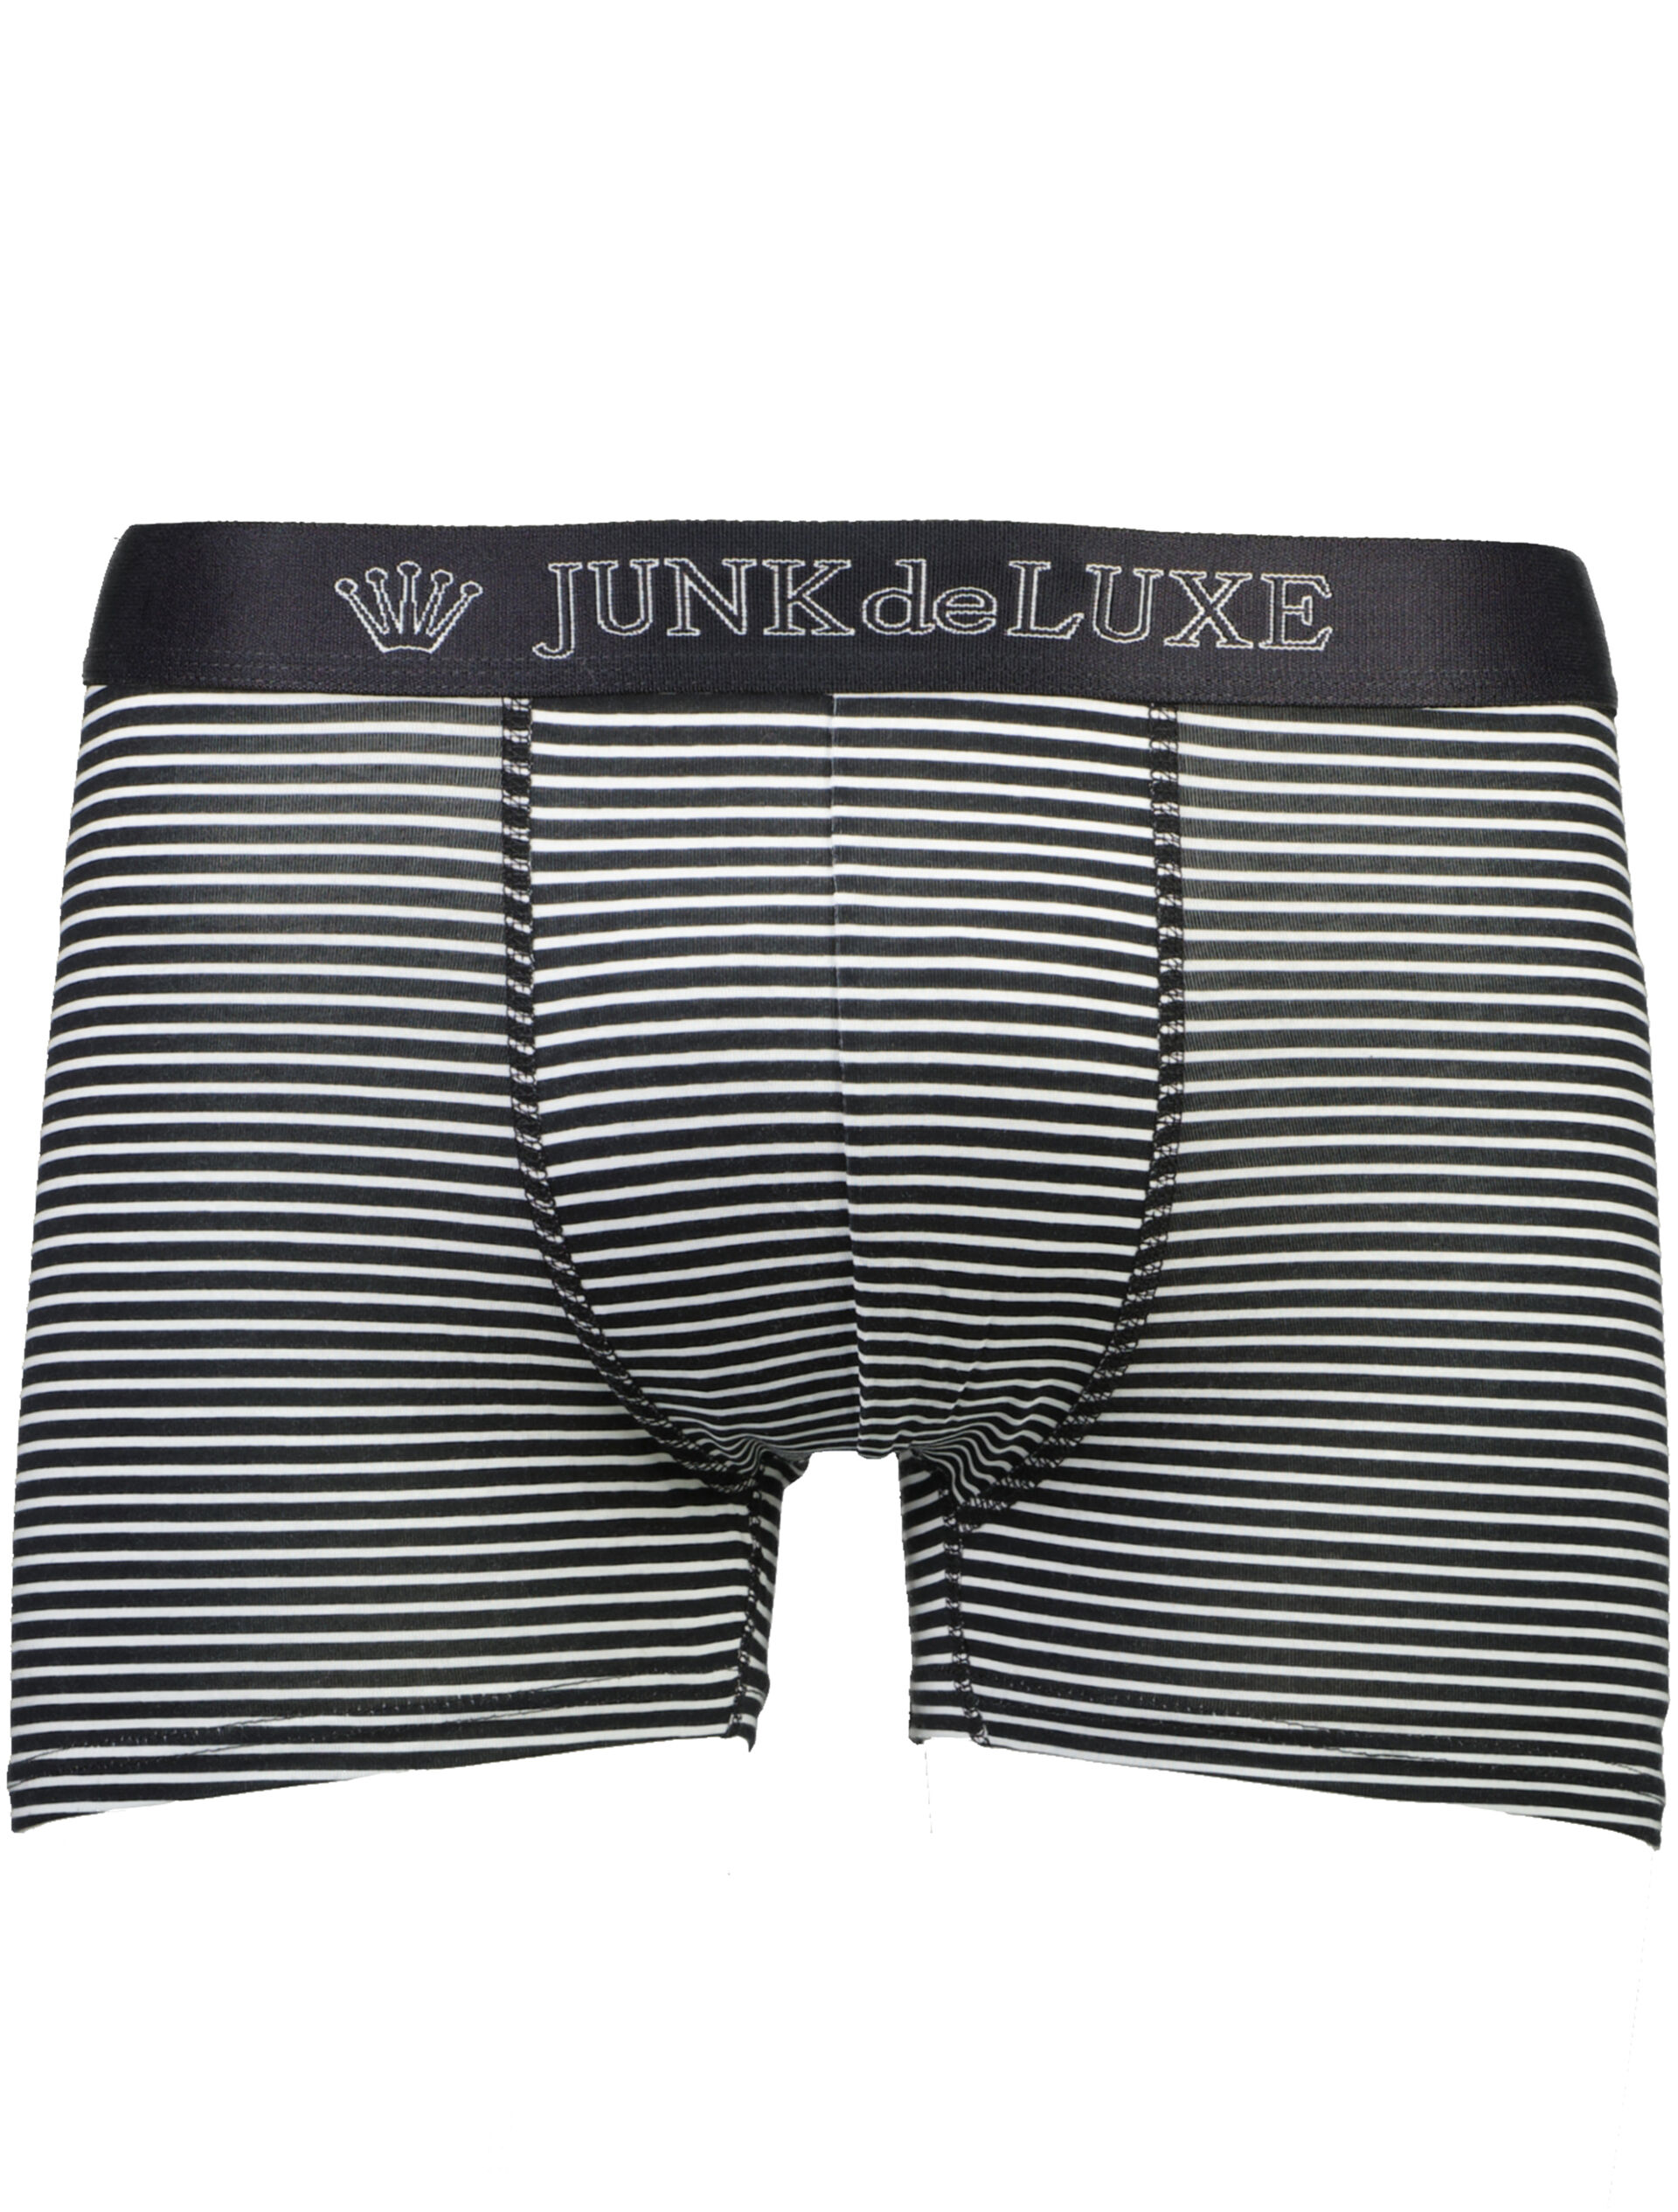 Junk de Luxe  Tights 60-925006